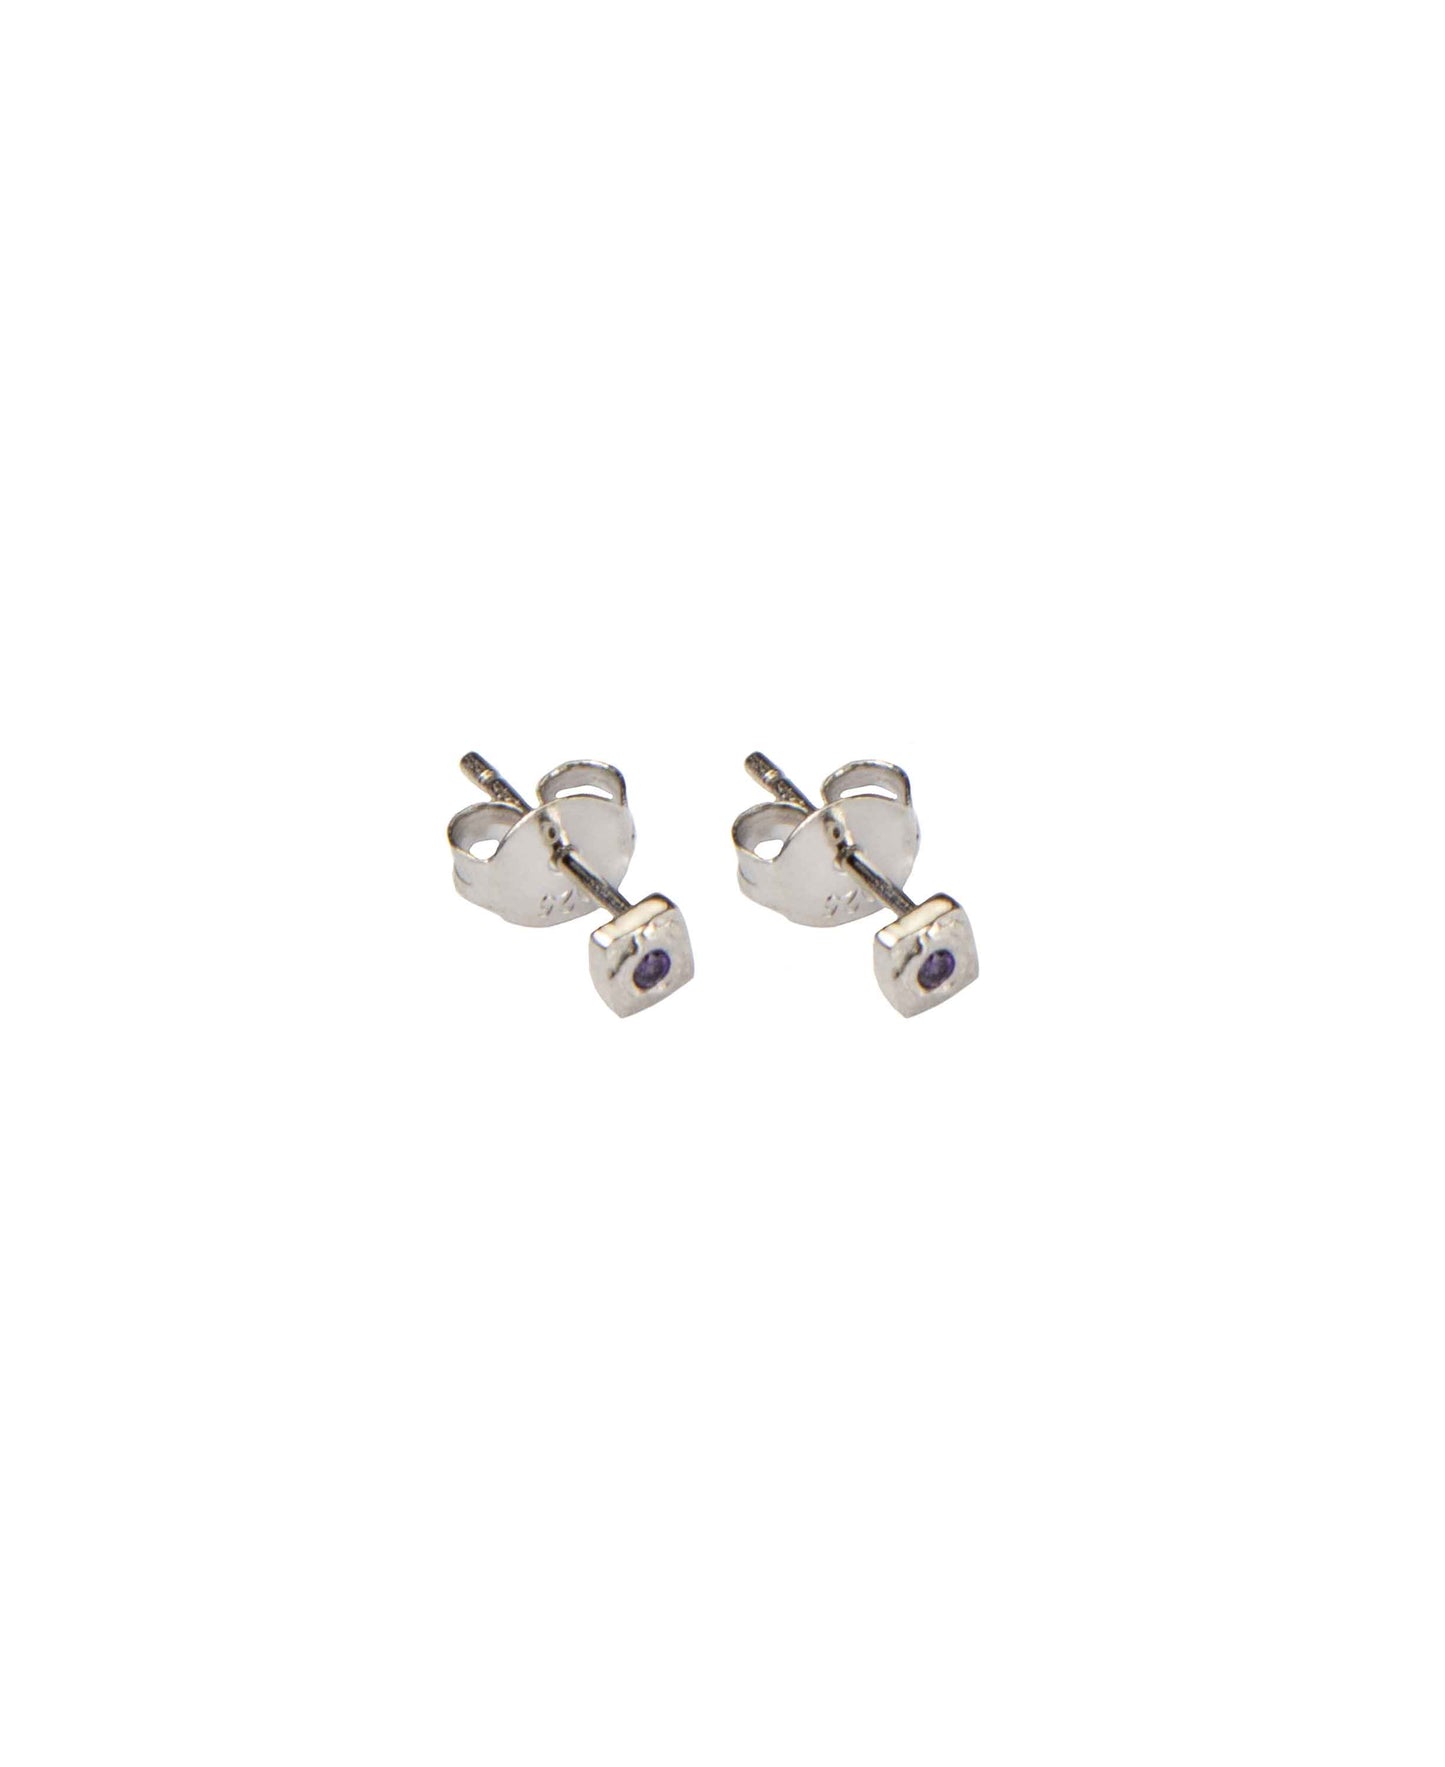 Oceania earrings